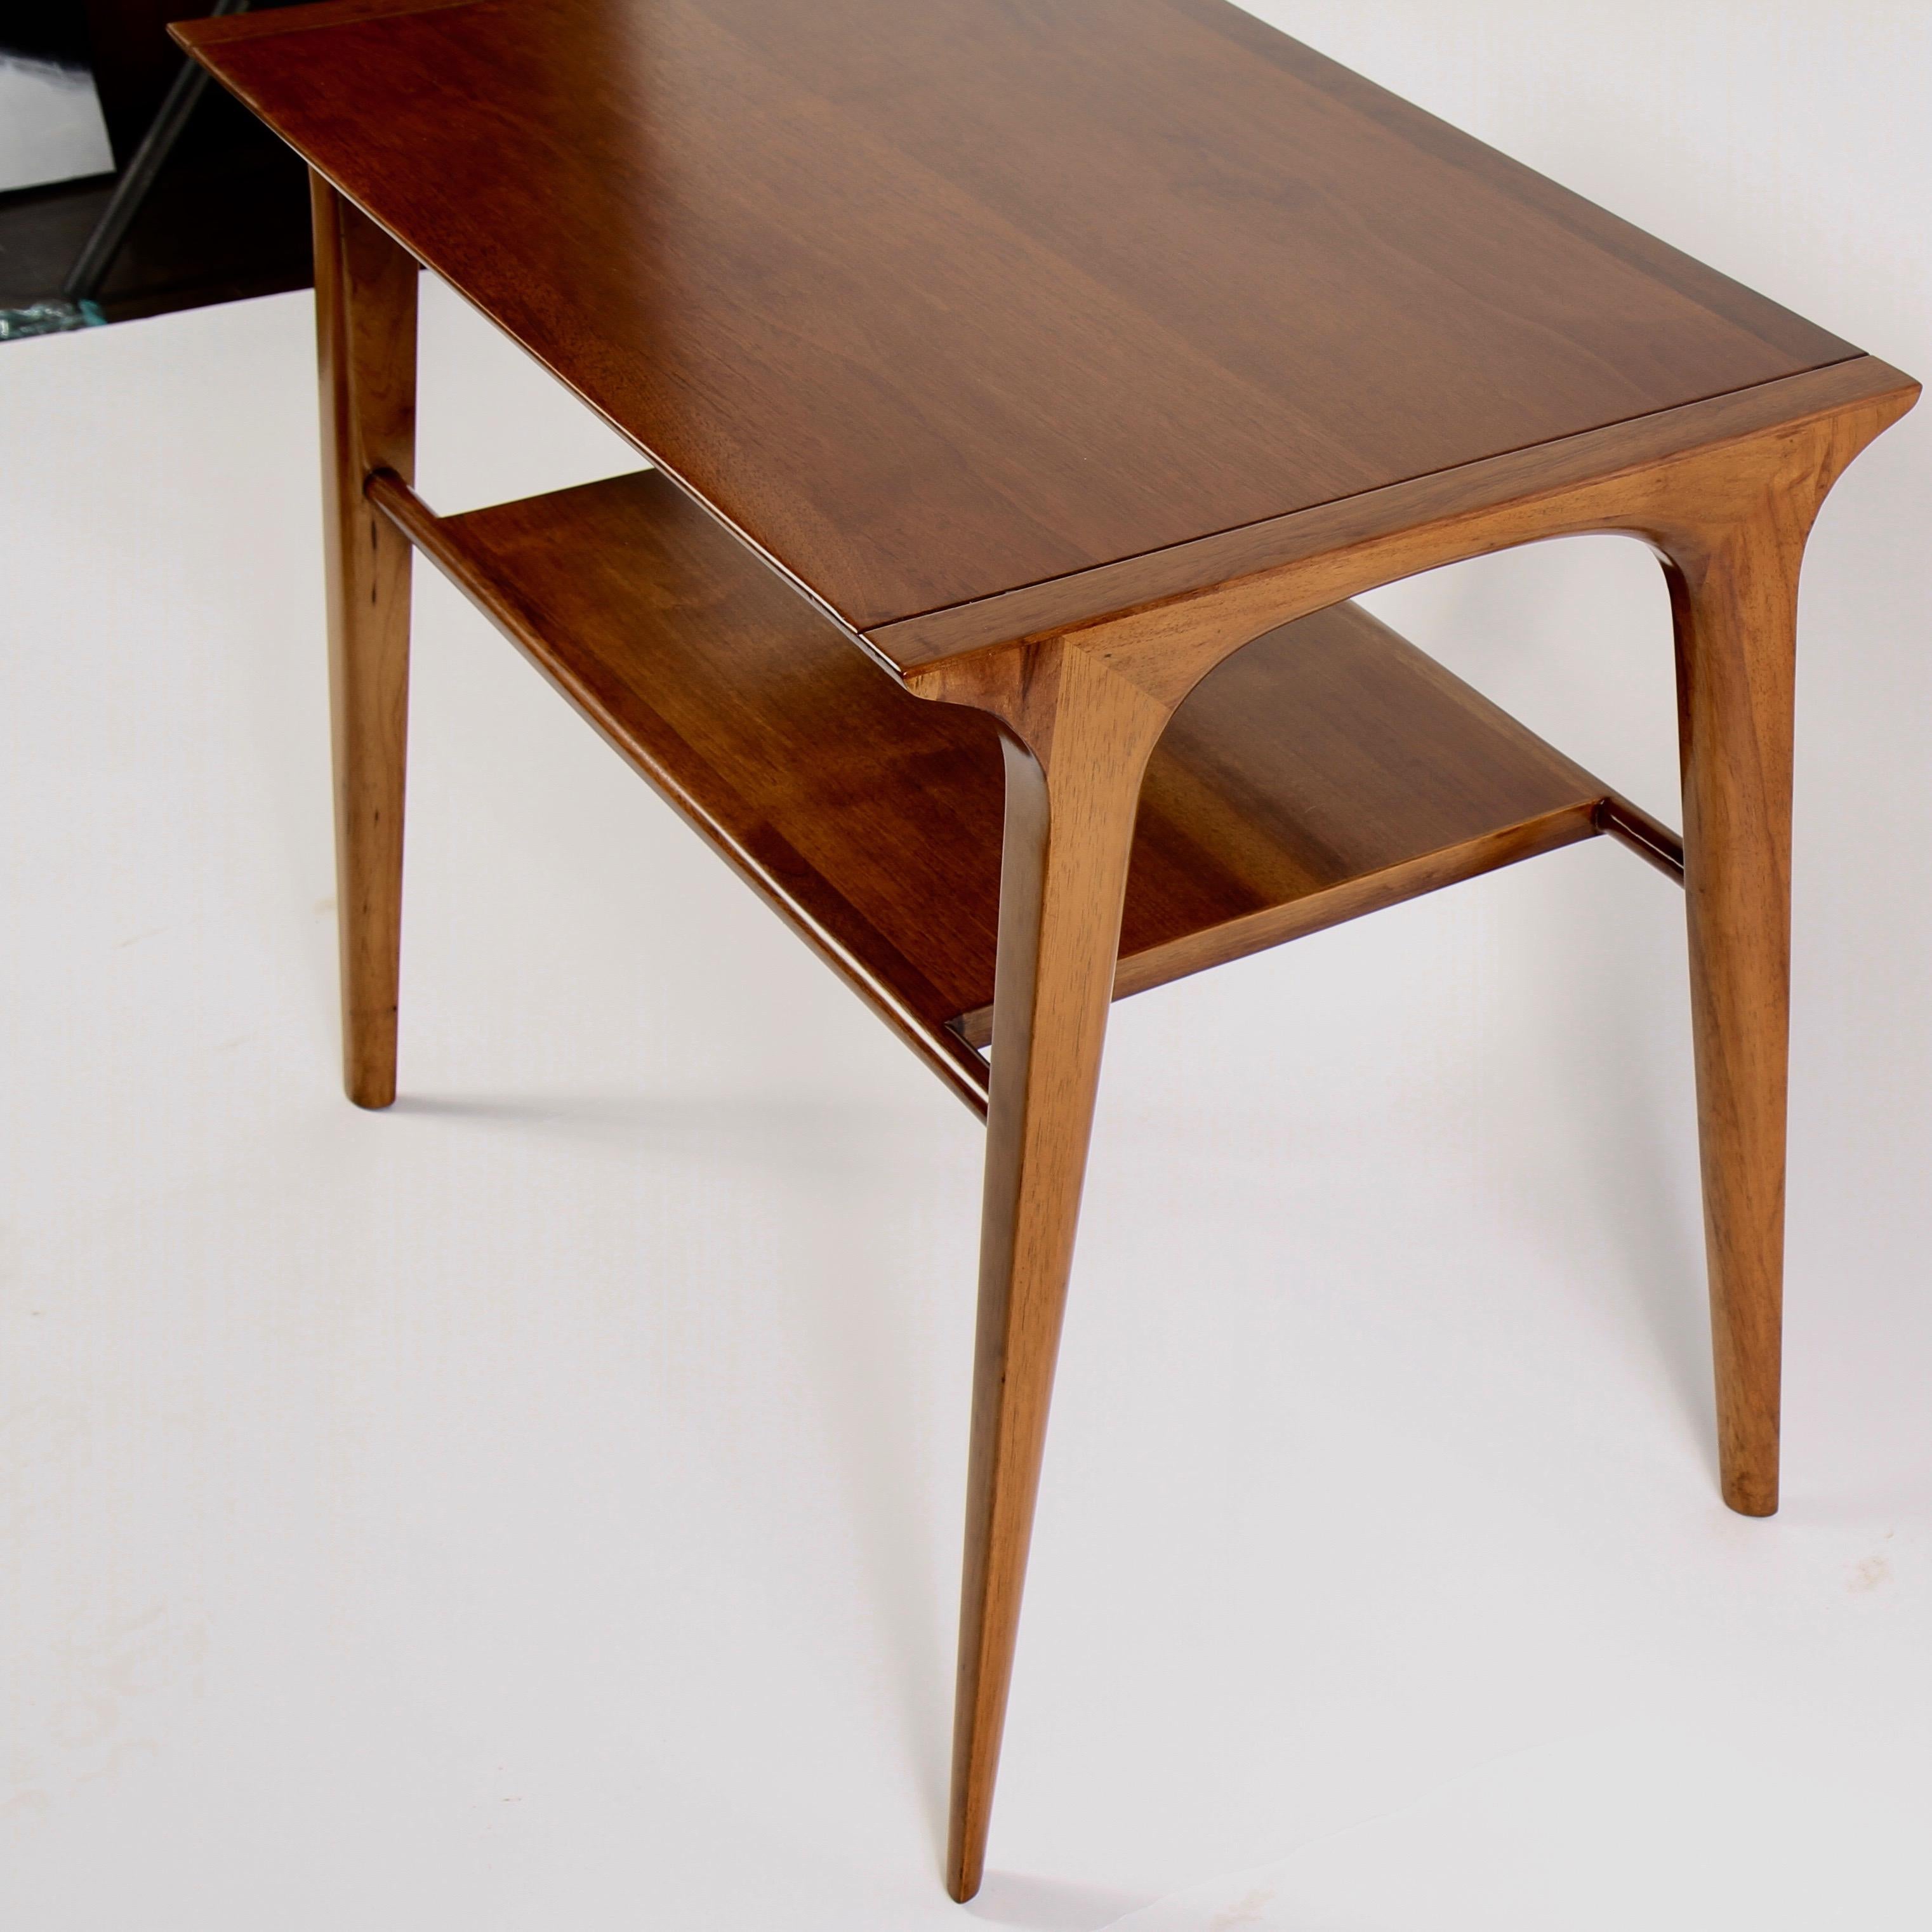 American John Van Koert “Profile” Two-Tiered Side Table for Drexel